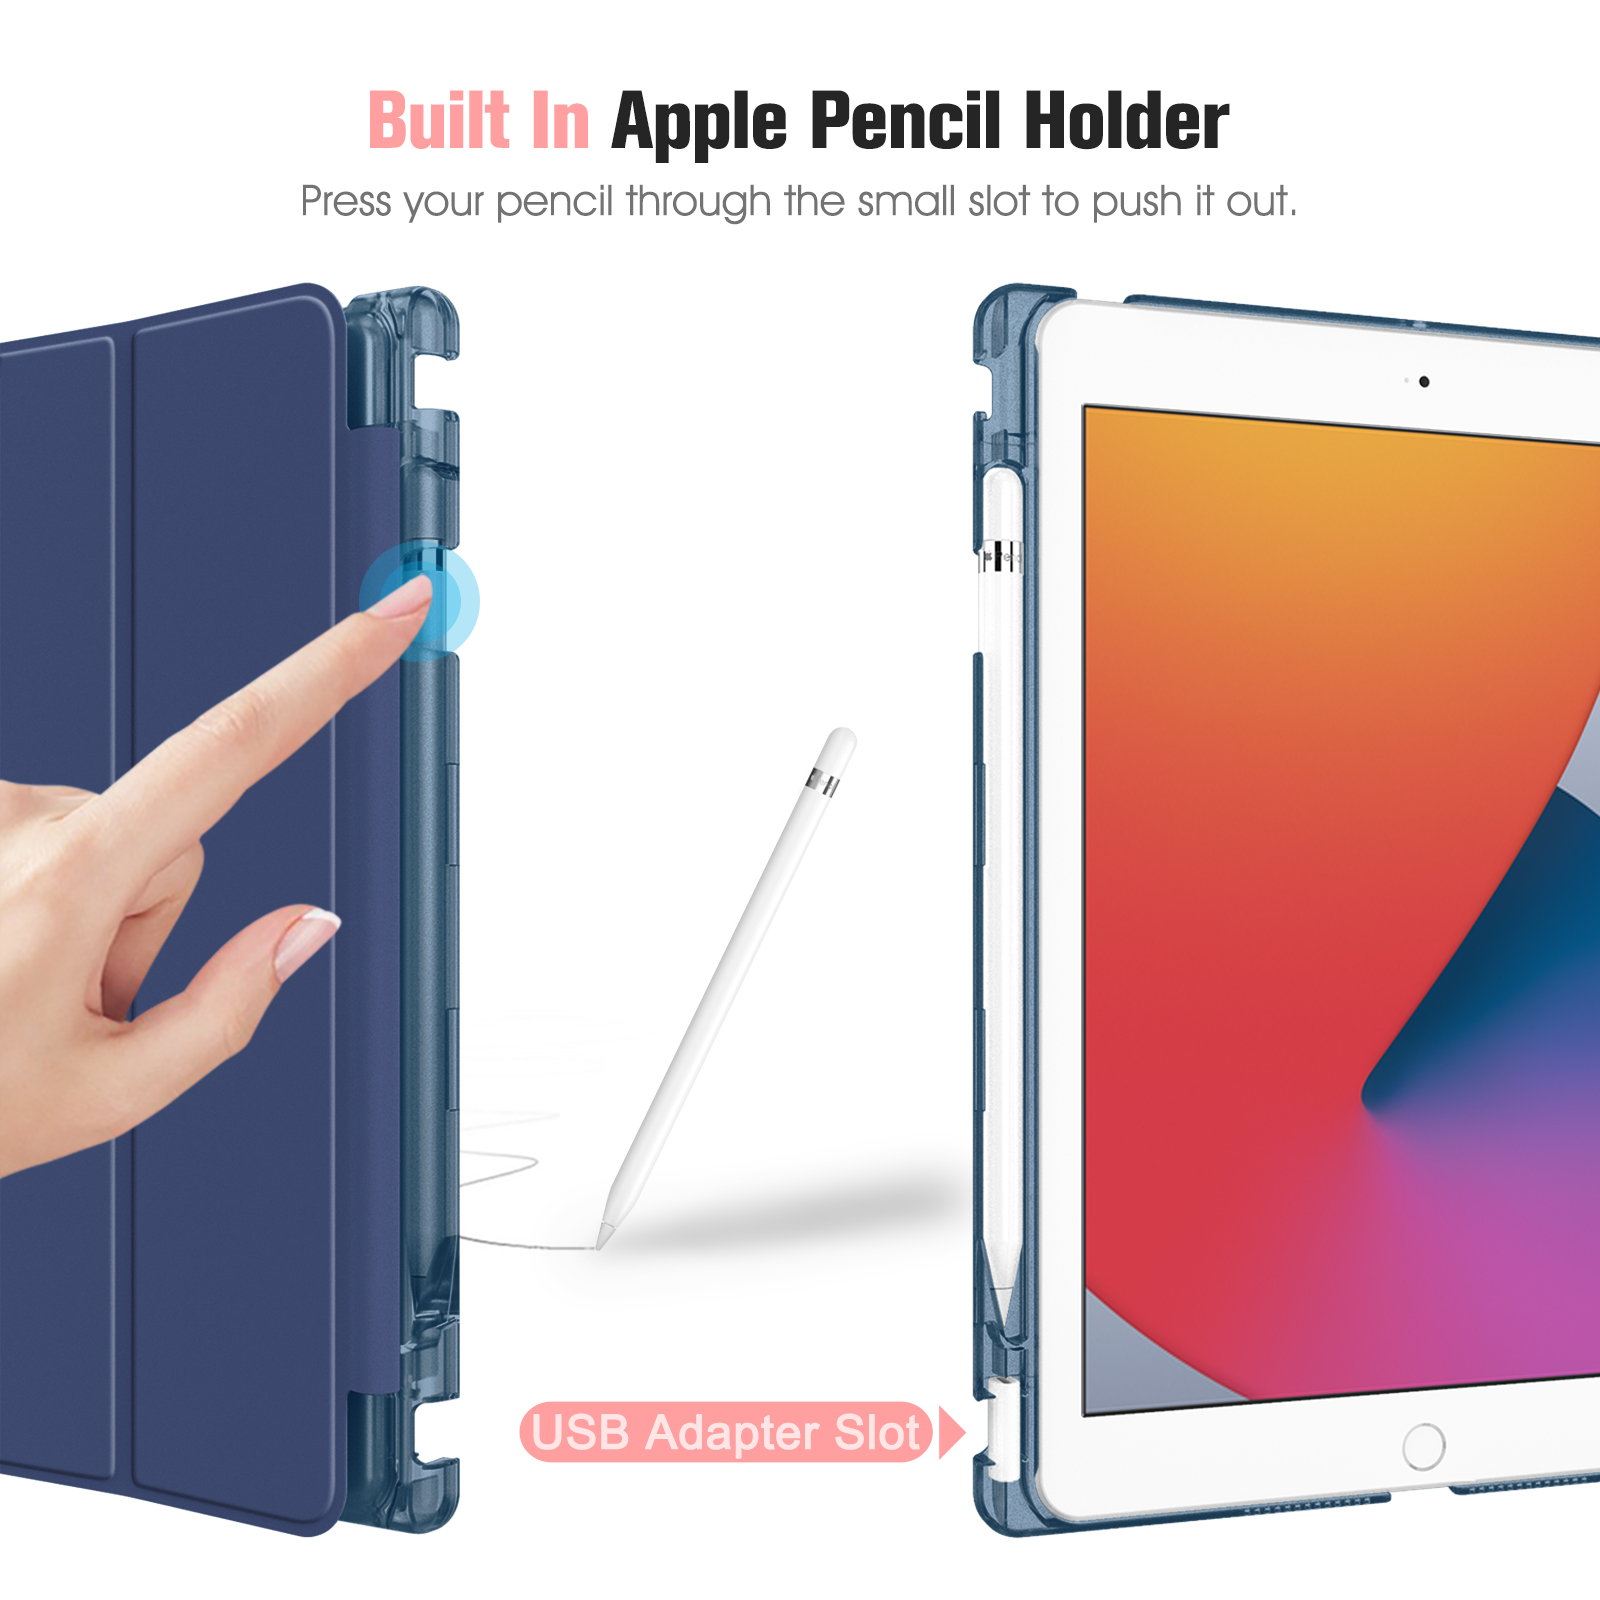 (9/8/7 blaugrün 2021/2020/2019), FINTIE 10.2 Apple, Zoll iPad - Satinoptik Hülle, Bookcover, Generation